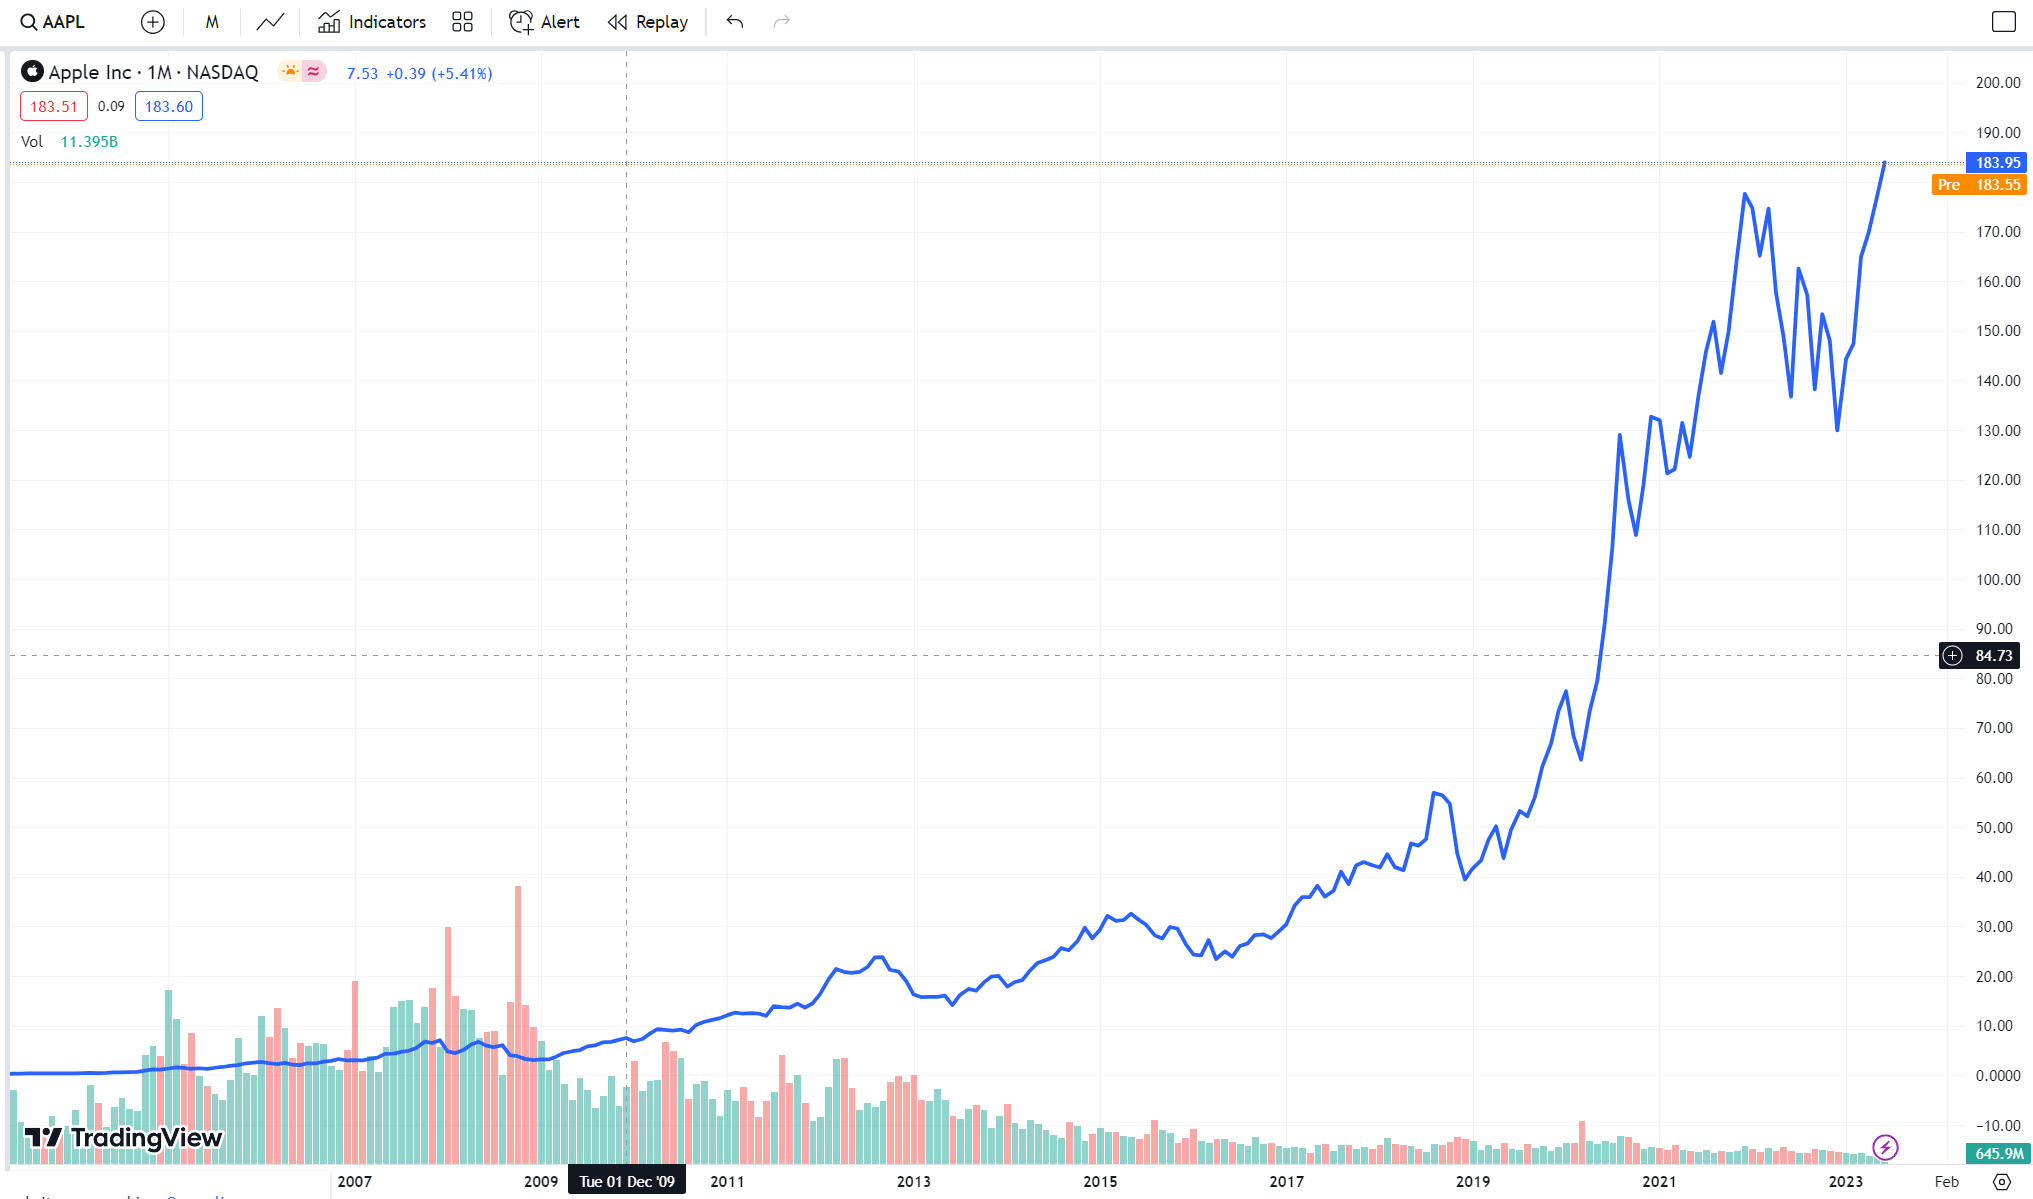 TradingView chart of apple stock - historical performance